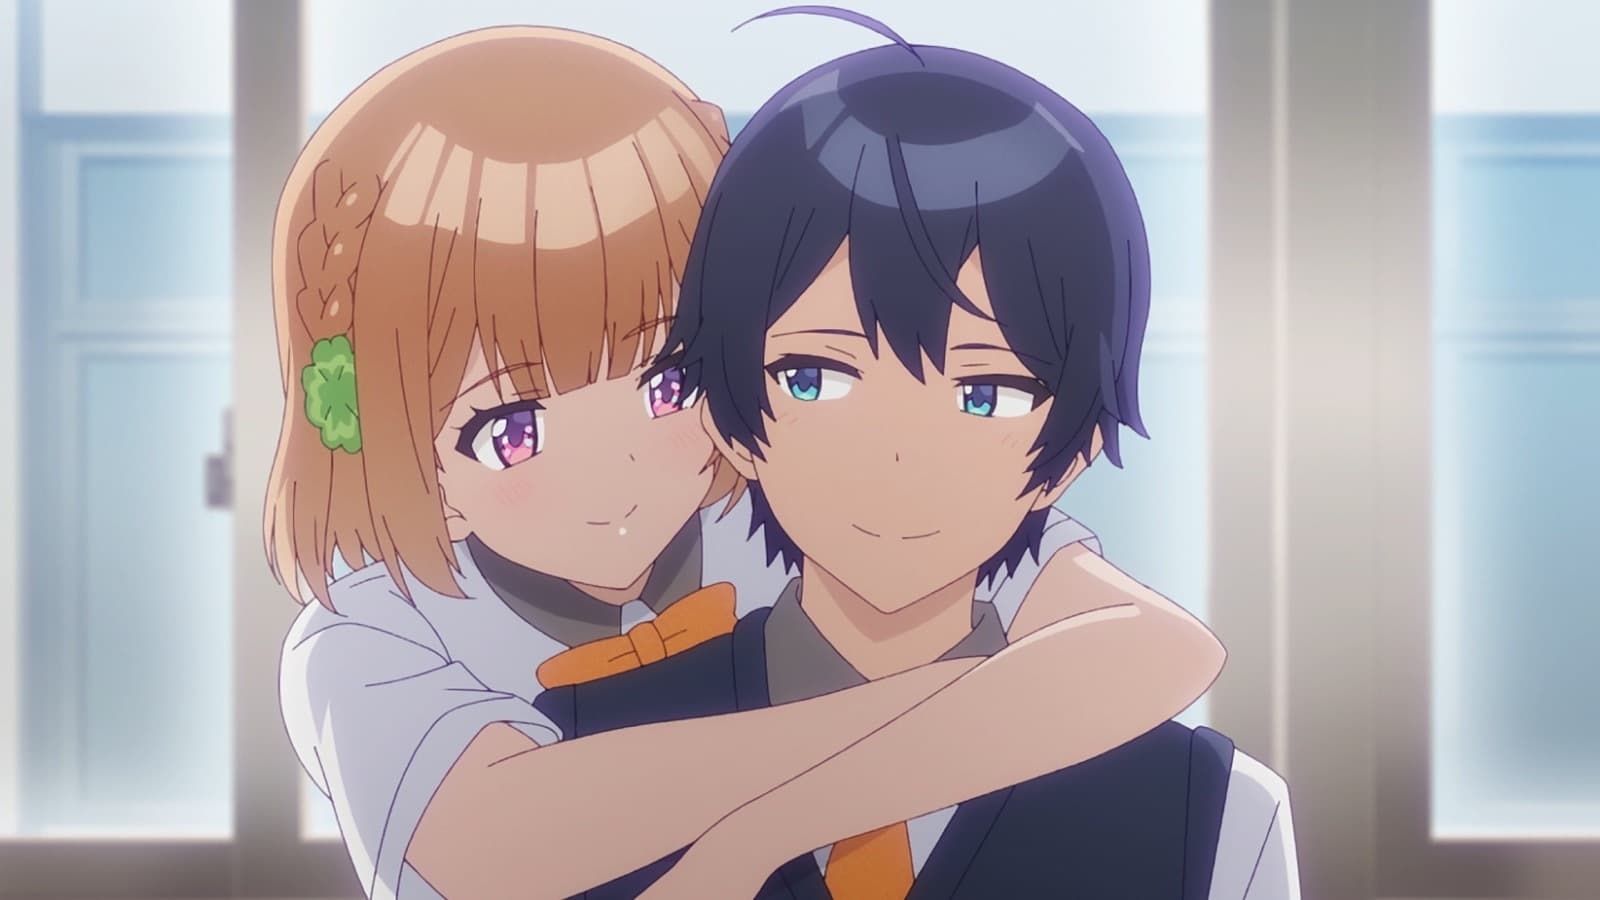 Romance anime between childhood friends  Forums  MyAnimeListnet